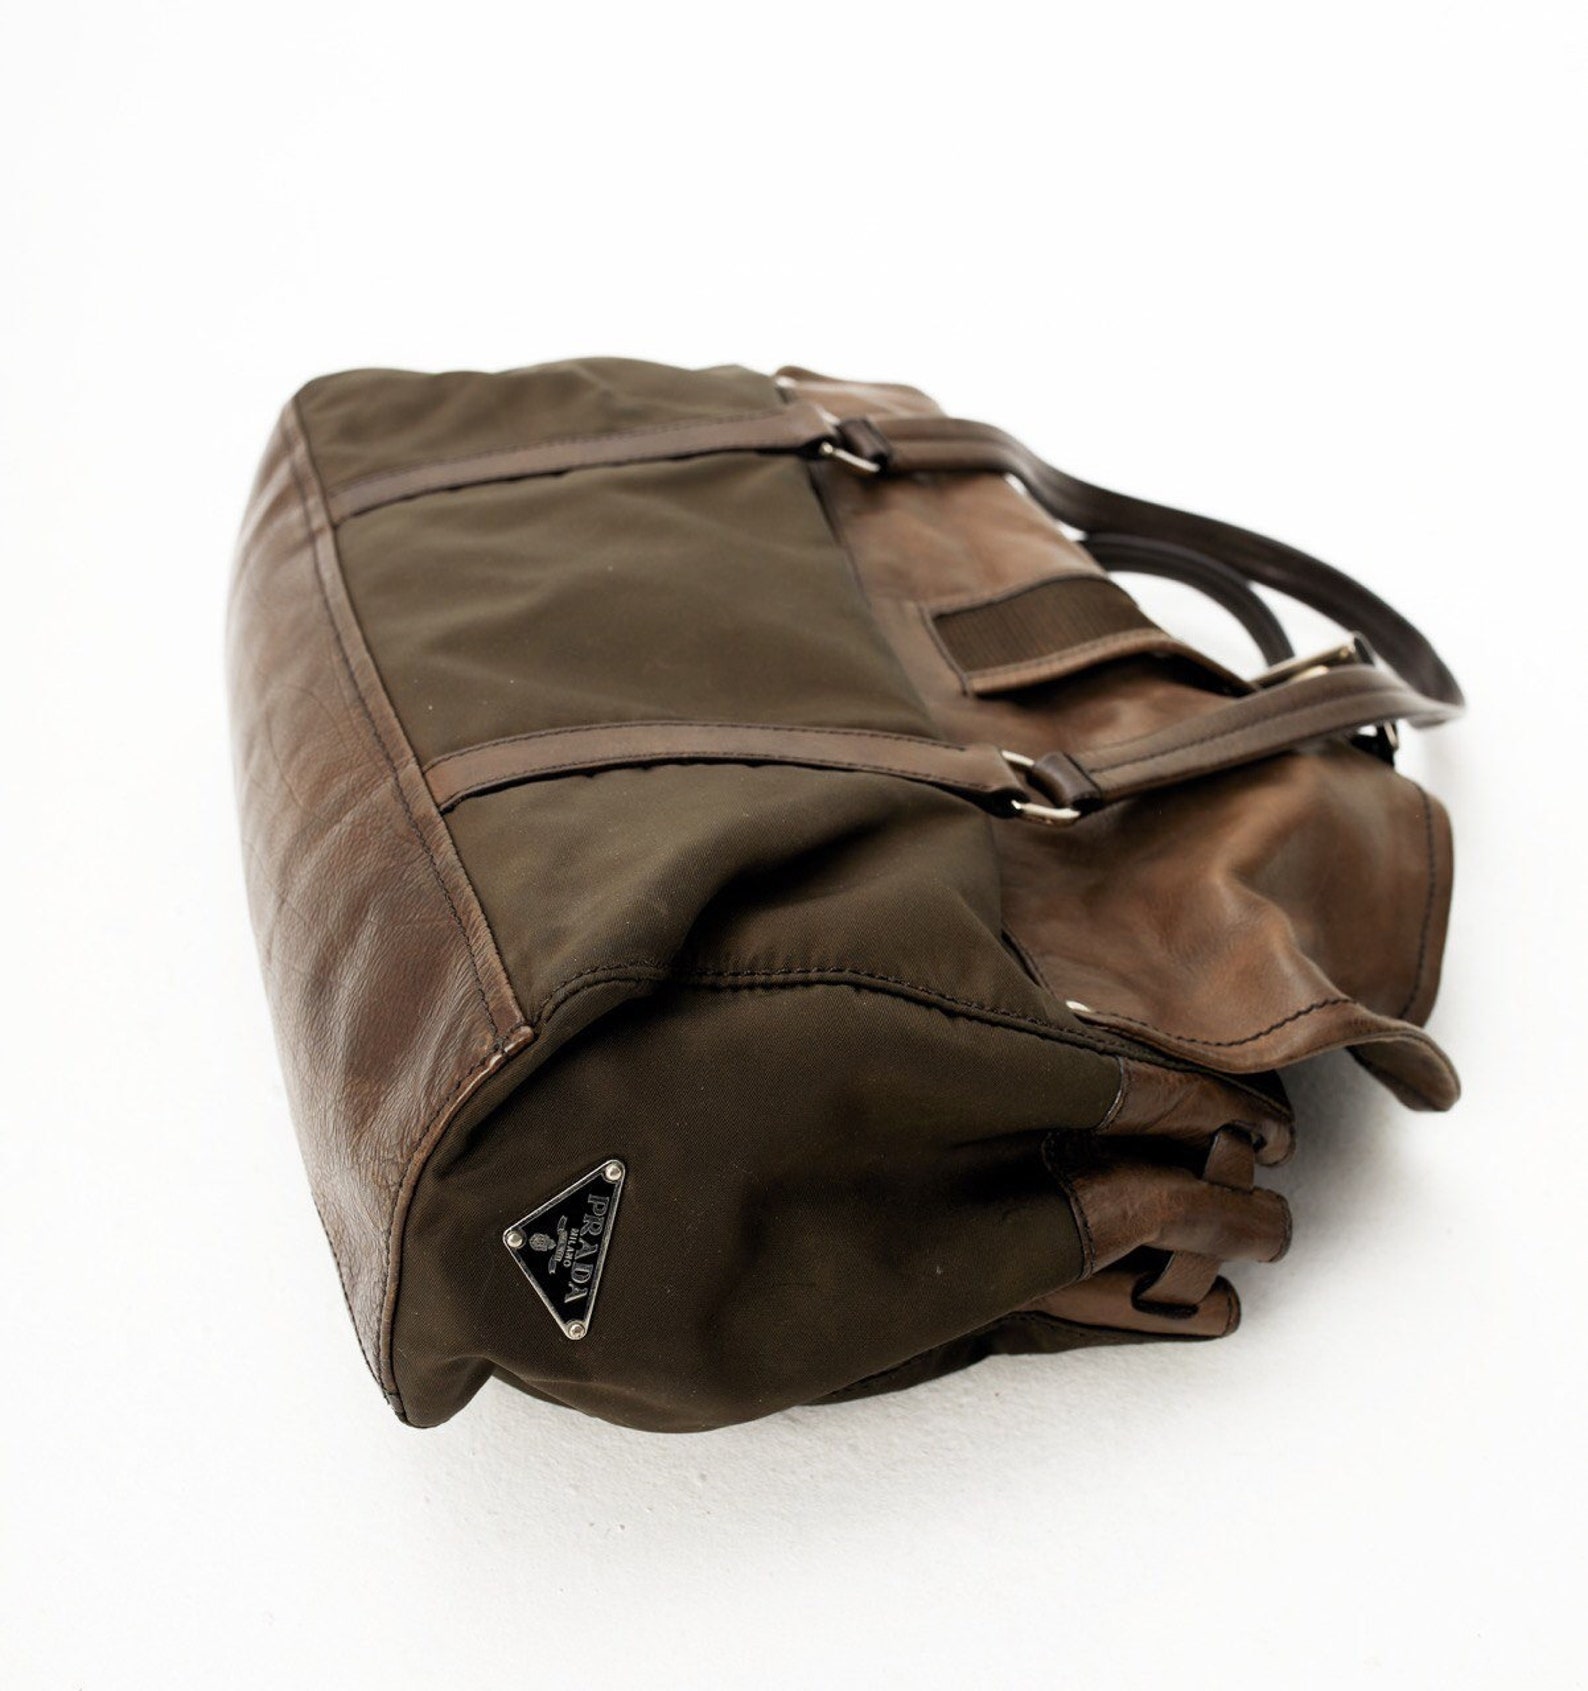 Prada 90s nylon and leather bag | Etsy